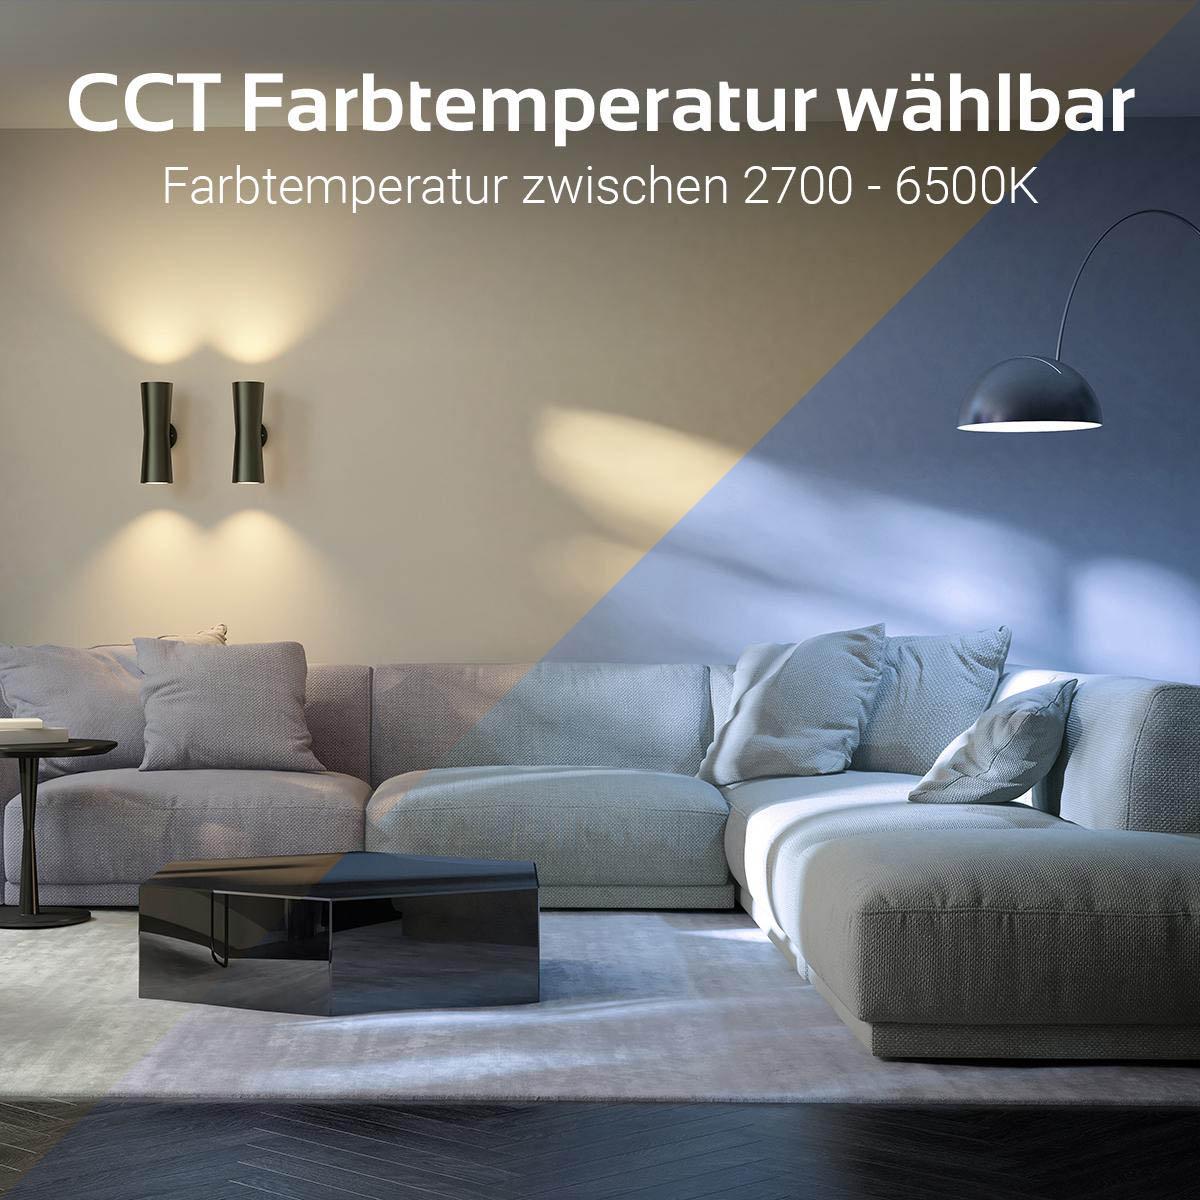 MiBoxer RGB+CCT Lampe 4W E27 | WiFi ready | FUT110